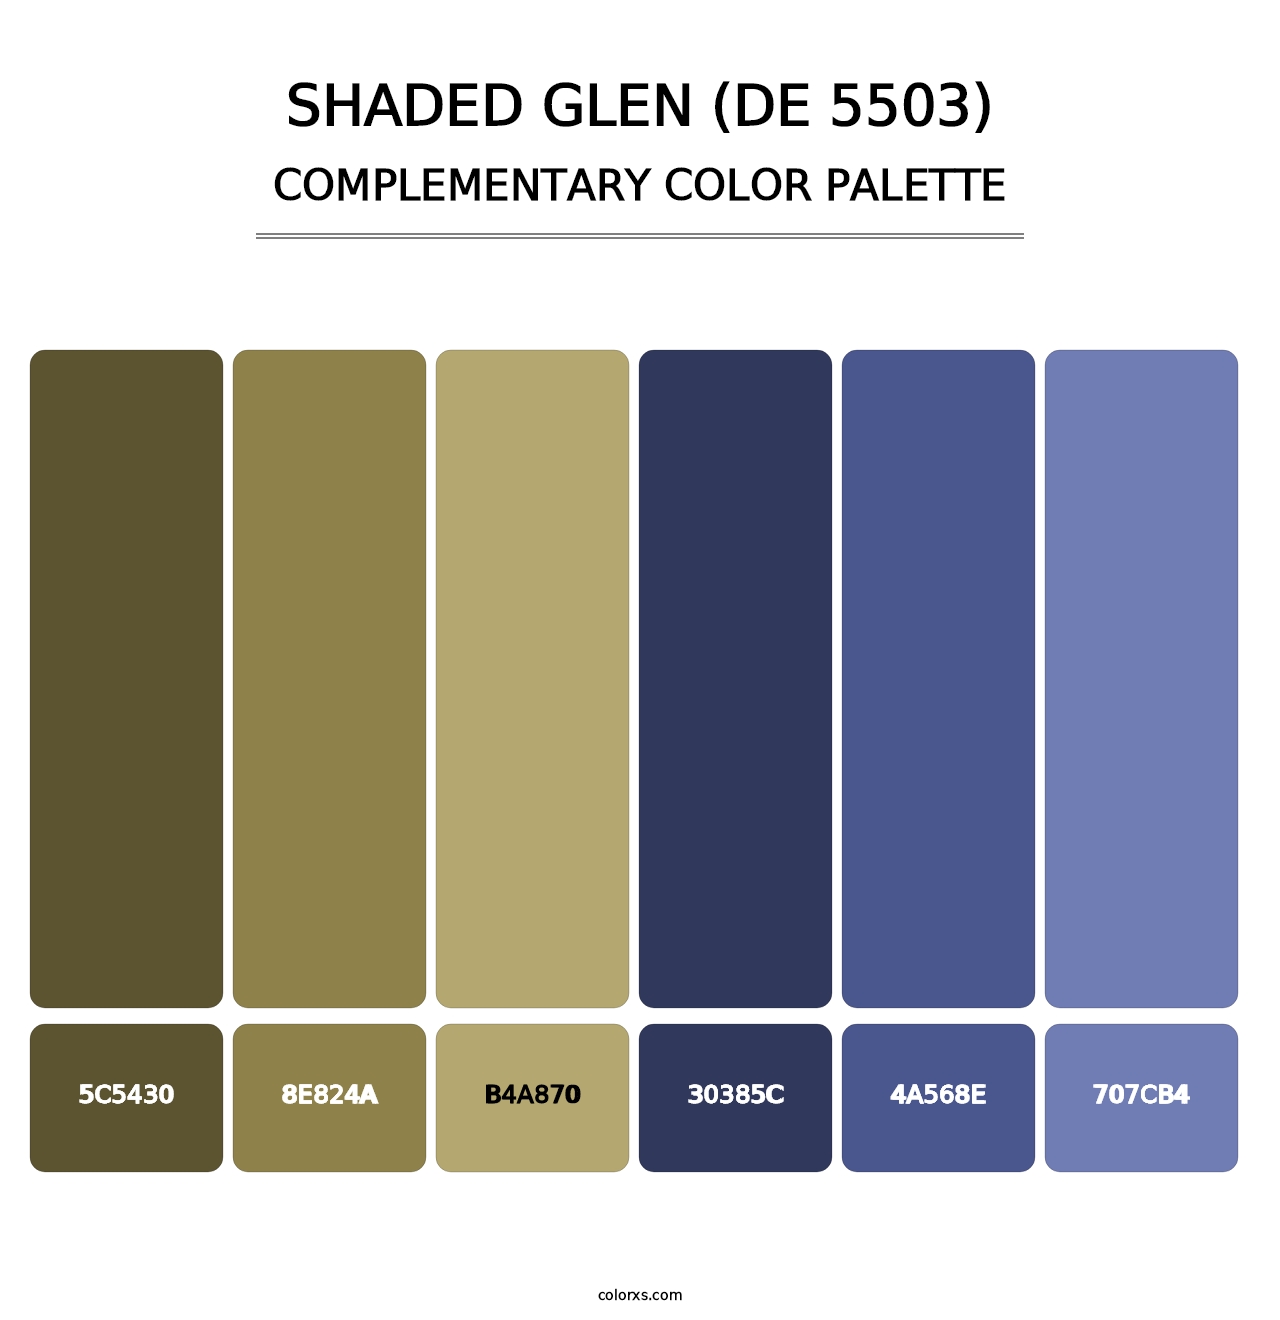 Shaded Glen (DE 5503) - Complementary Color Palette